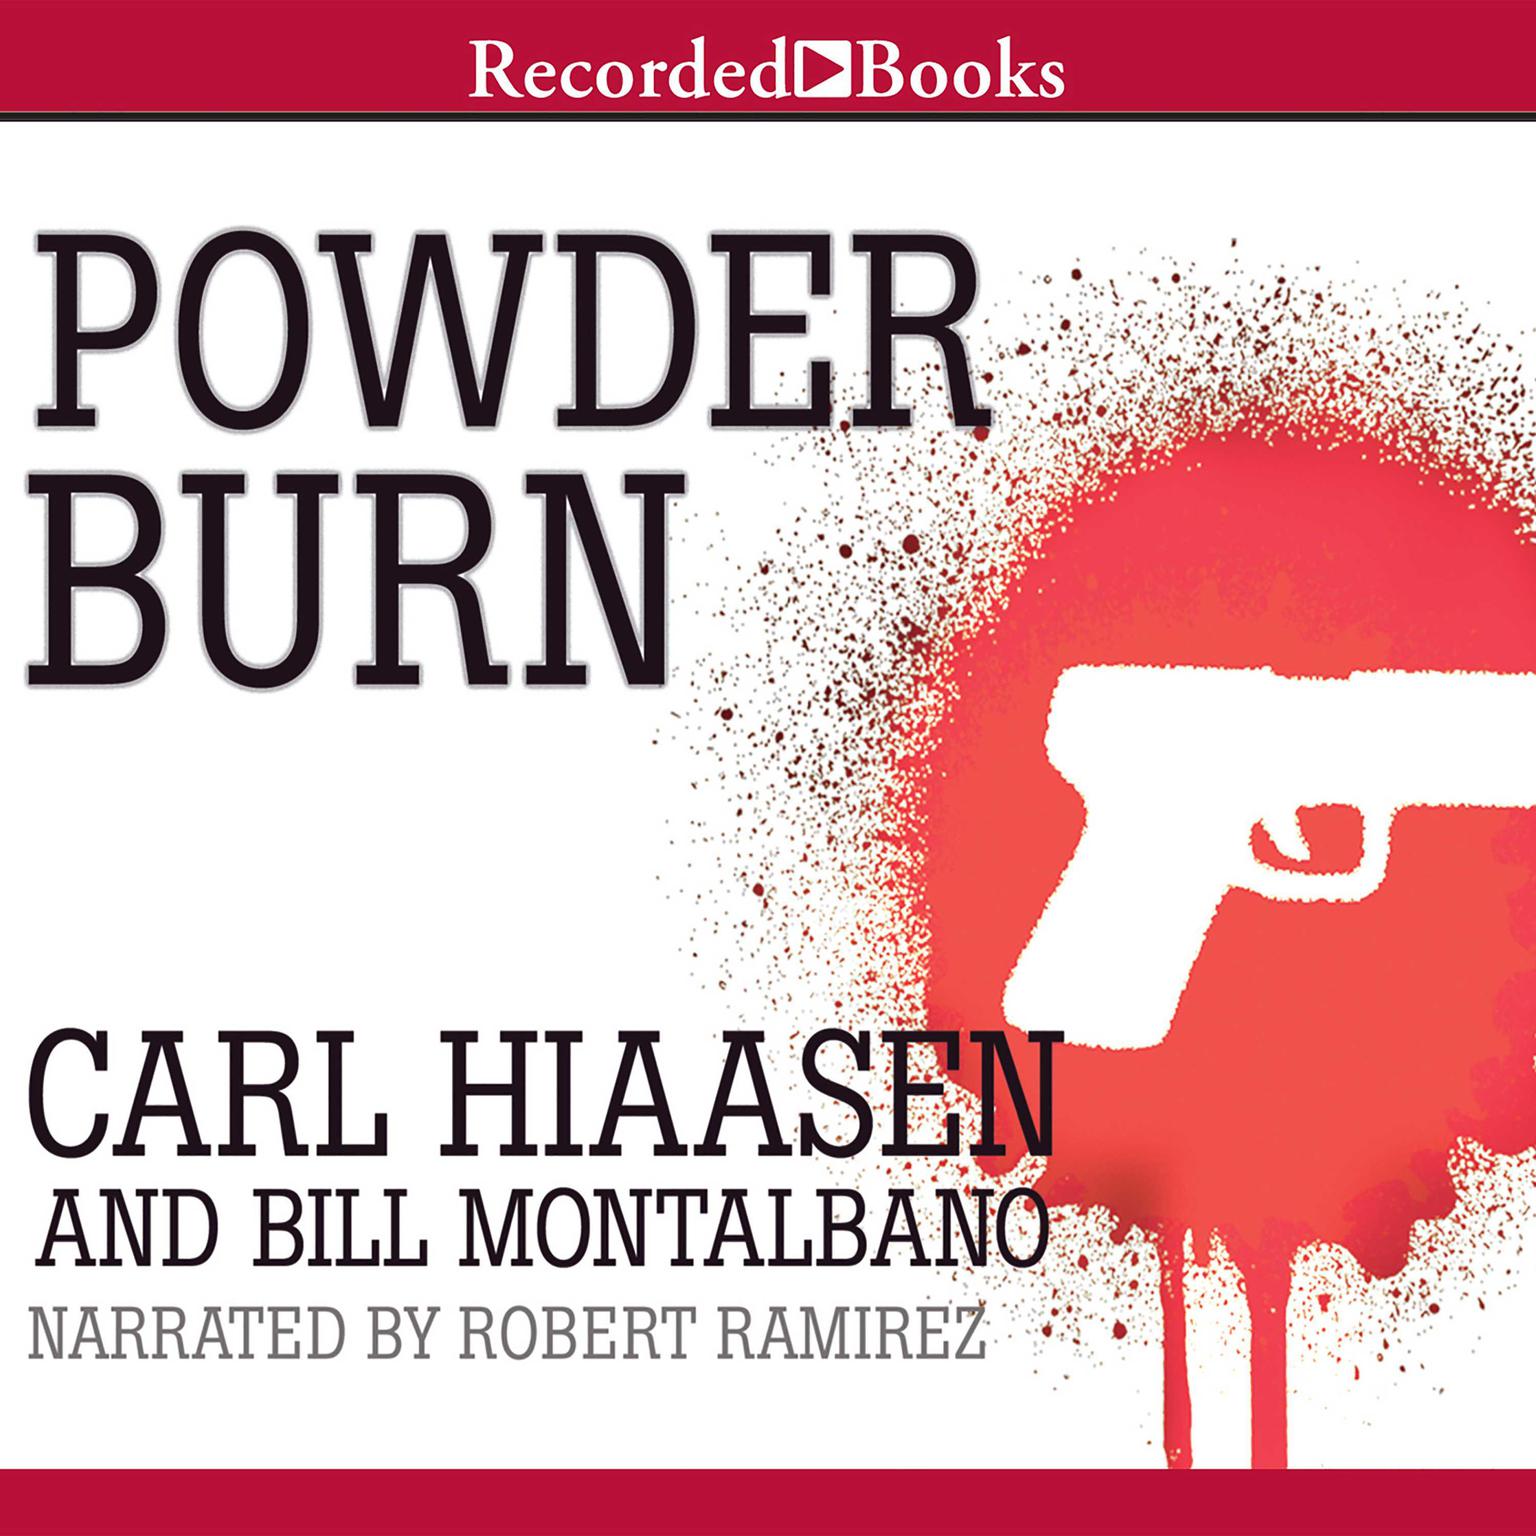 Powder Burn Audiobook, by Carl Hiaasen